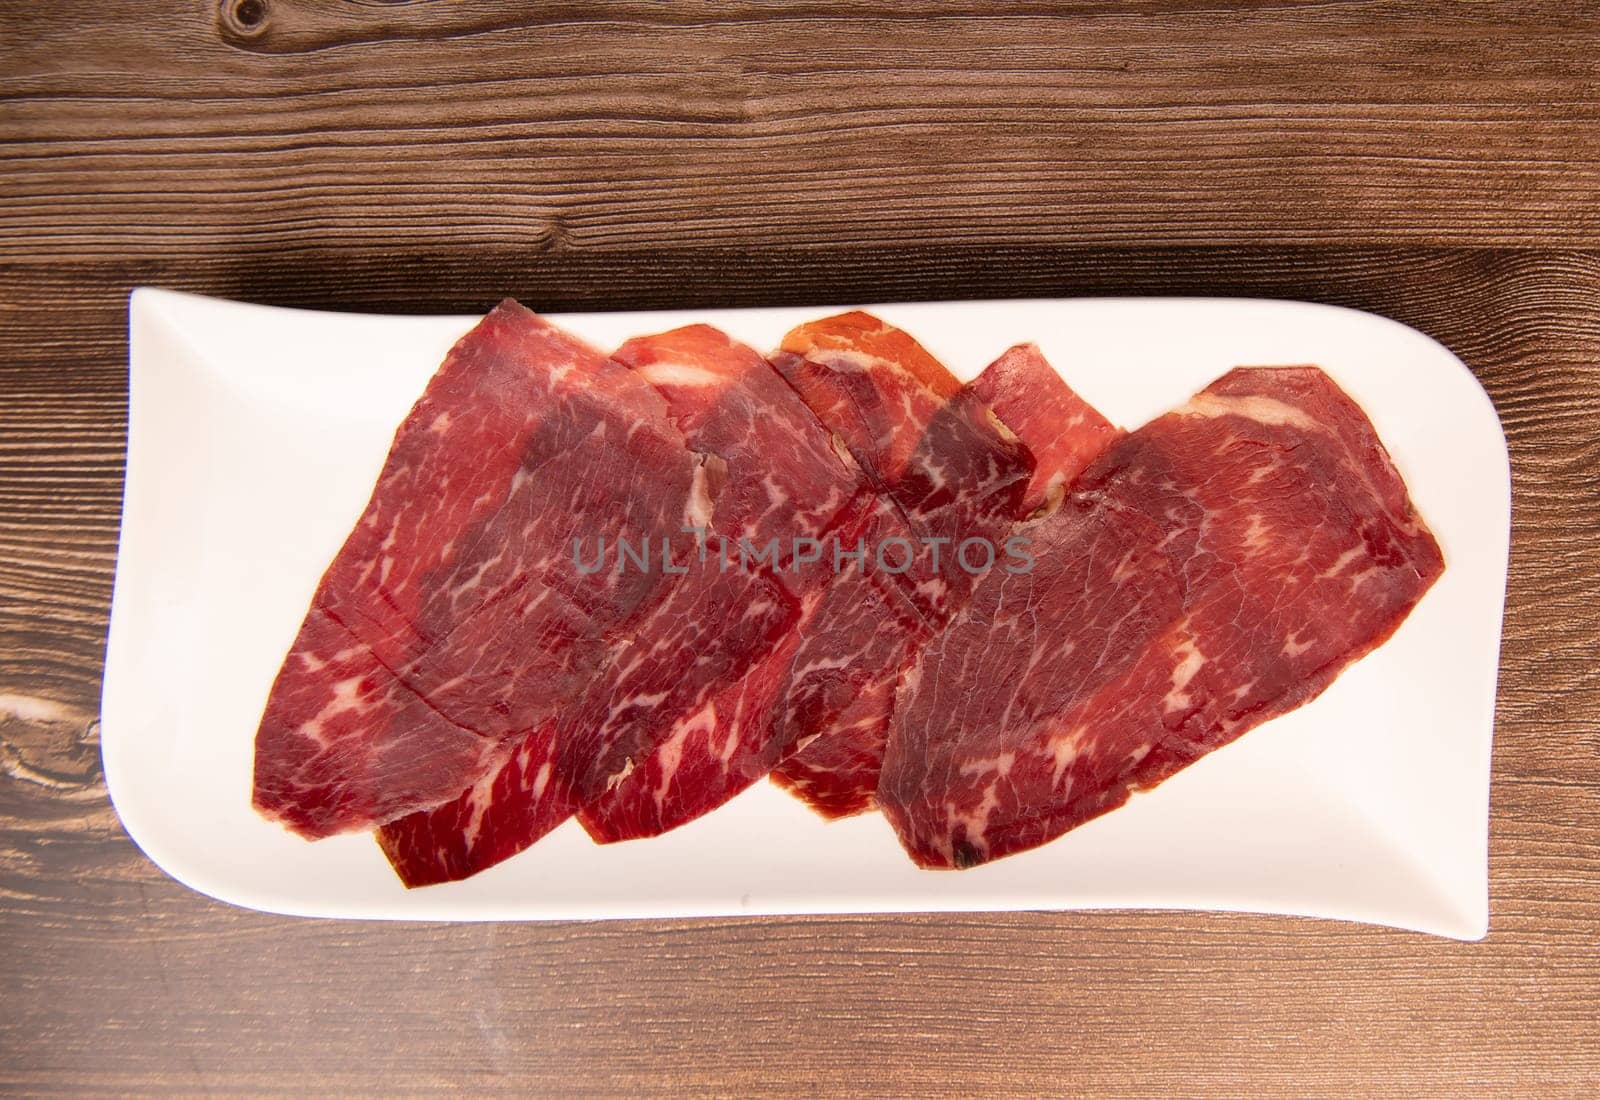 Dry-cured Spanish ham, Serrano ham, Bellota ham, Italian prosciutto crudo or Parma ham, wagyu slice. High quality photo